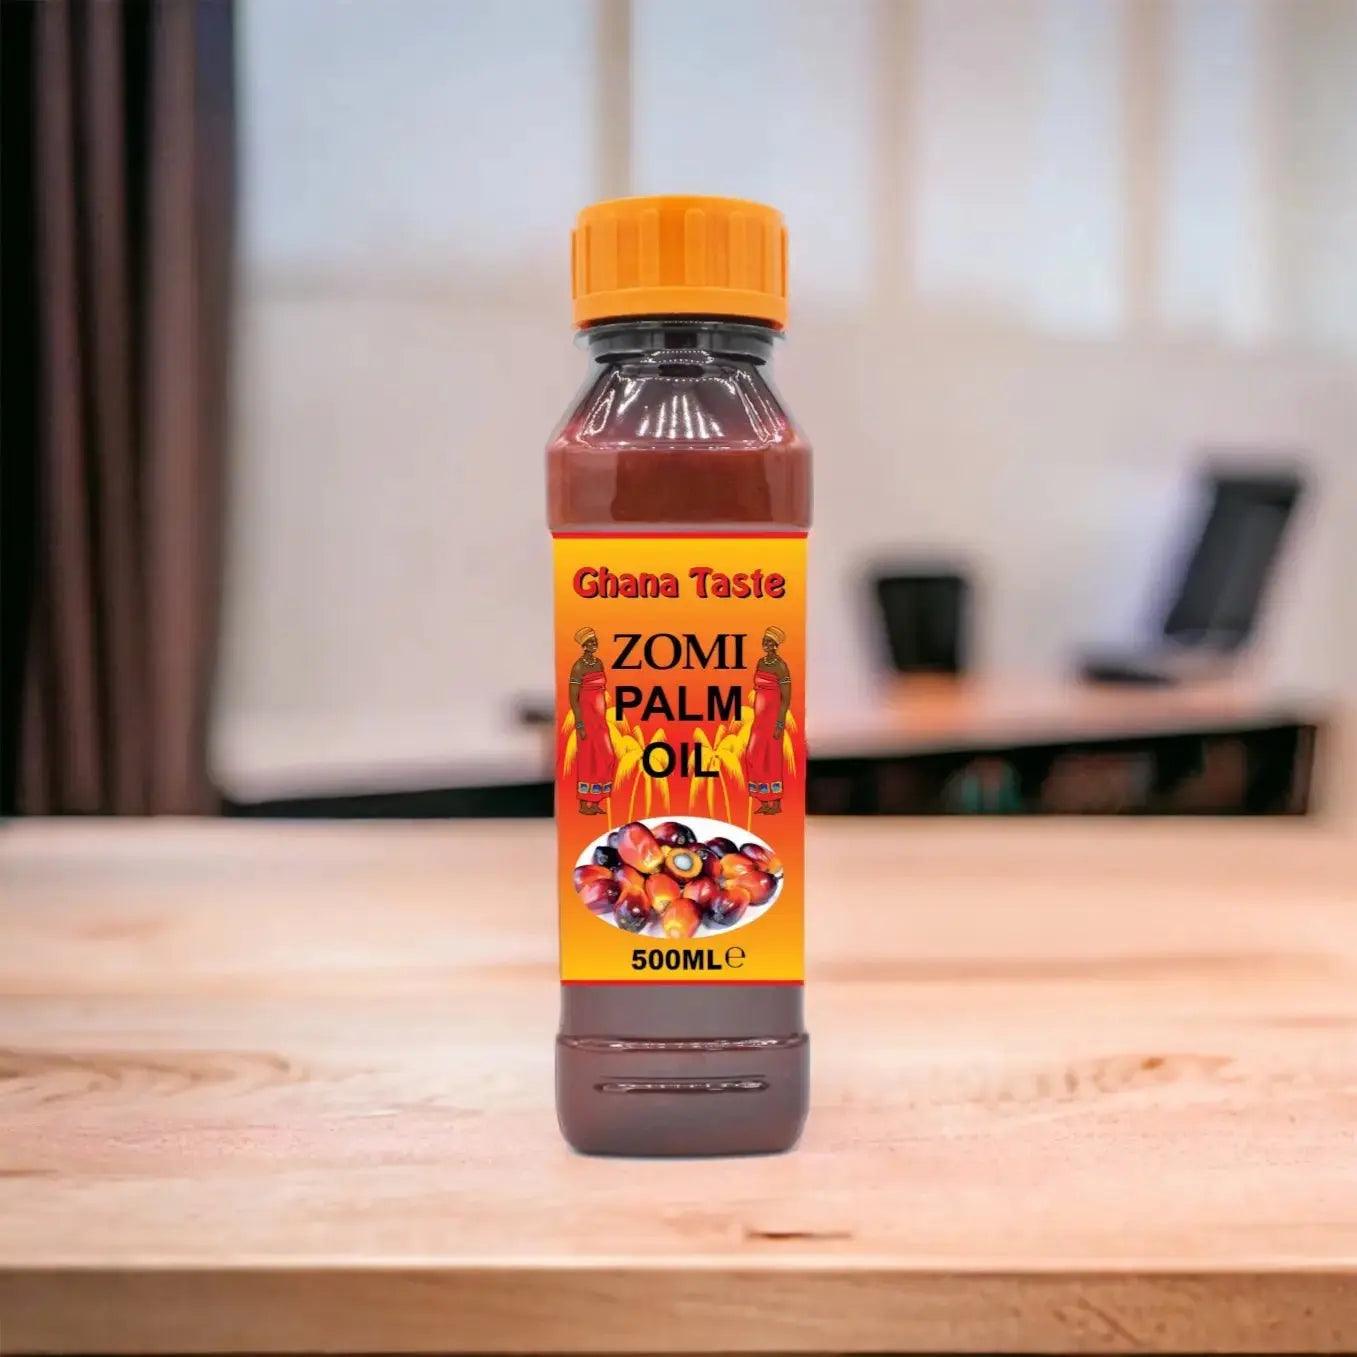 Ghana Taste Zomi Palm Oil Authentic Ghanaian Palm Oil for Traditional Flavors - Honesty Sales U.K